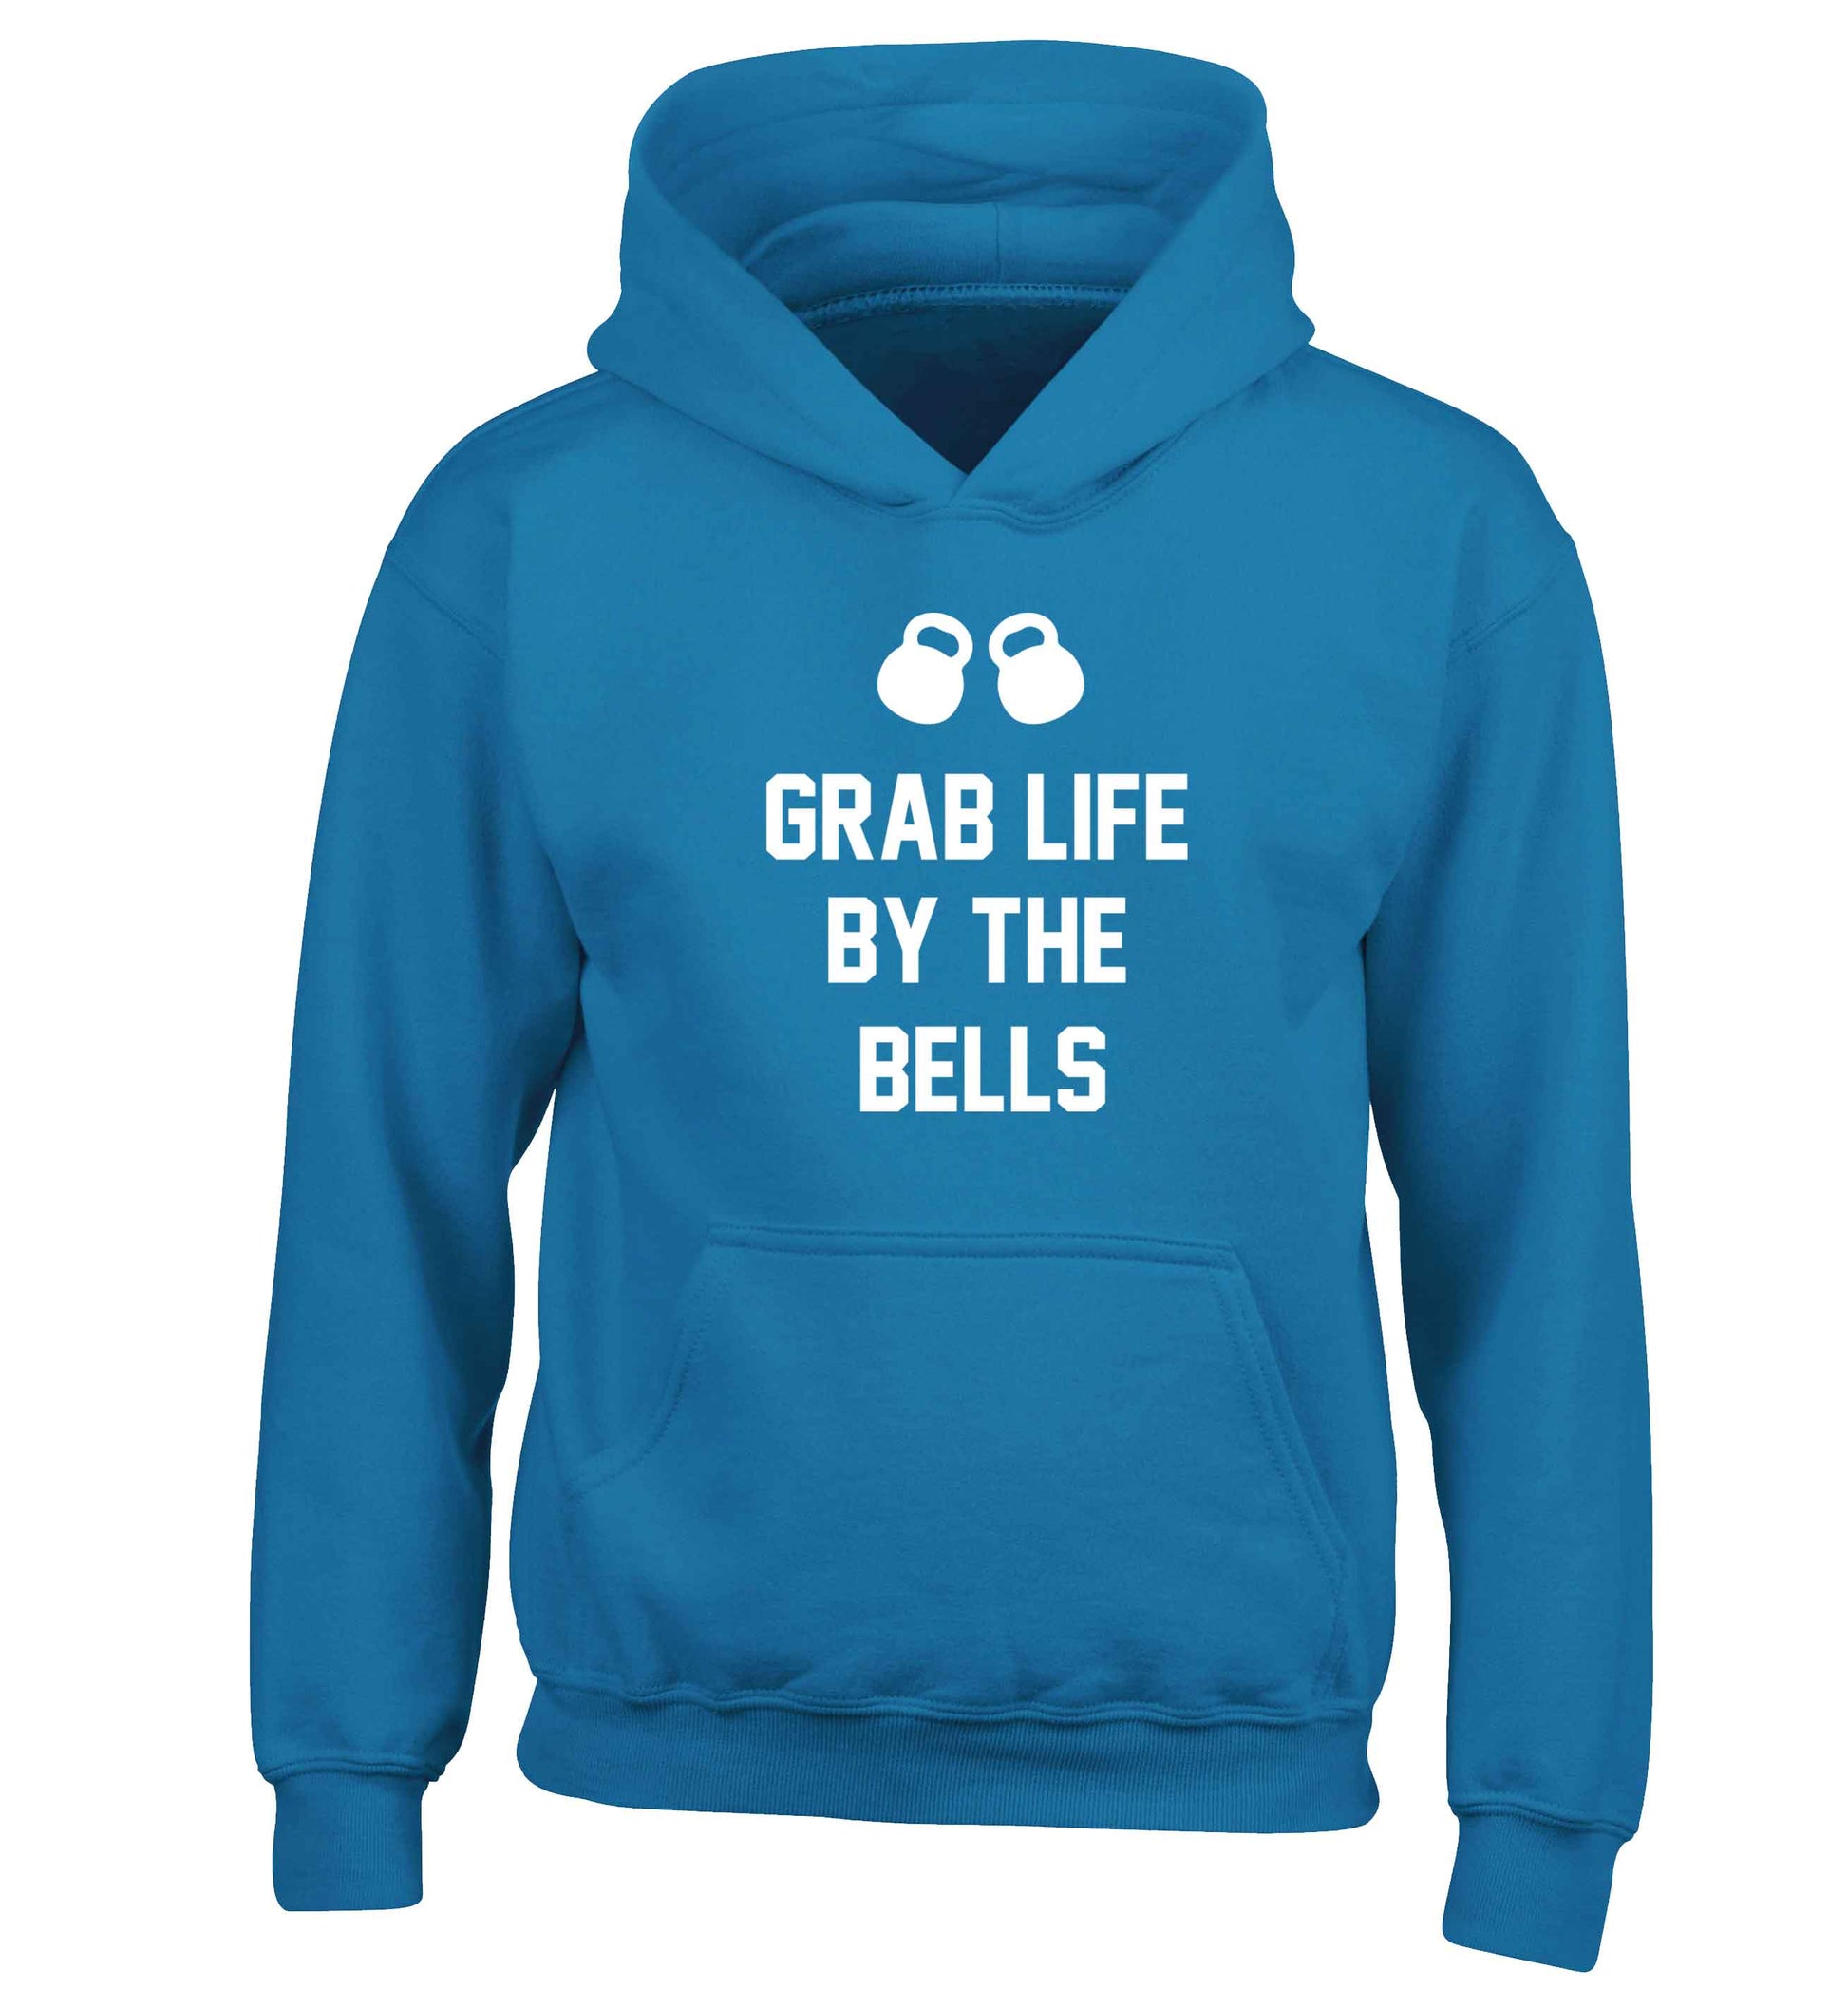 Grab life by the bells children's blue hoodie 12-13 Years